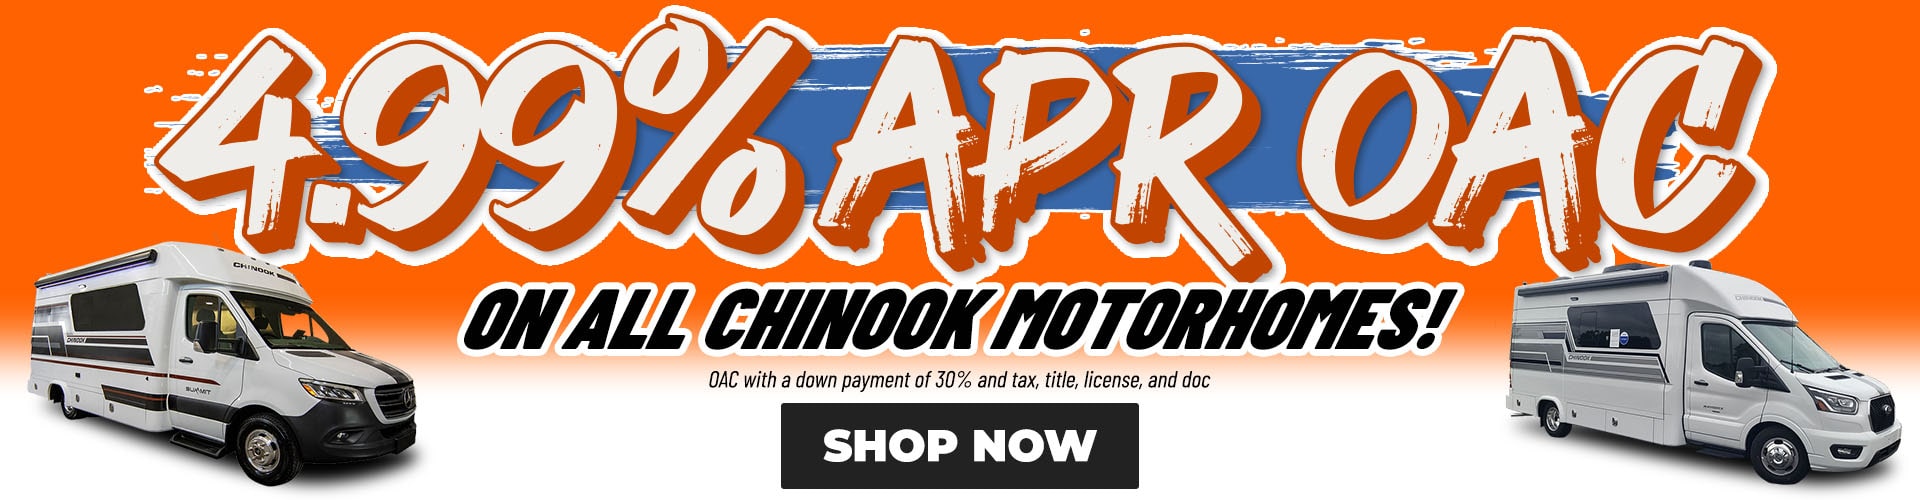 4.99% APR on all Chinook Motorhomes